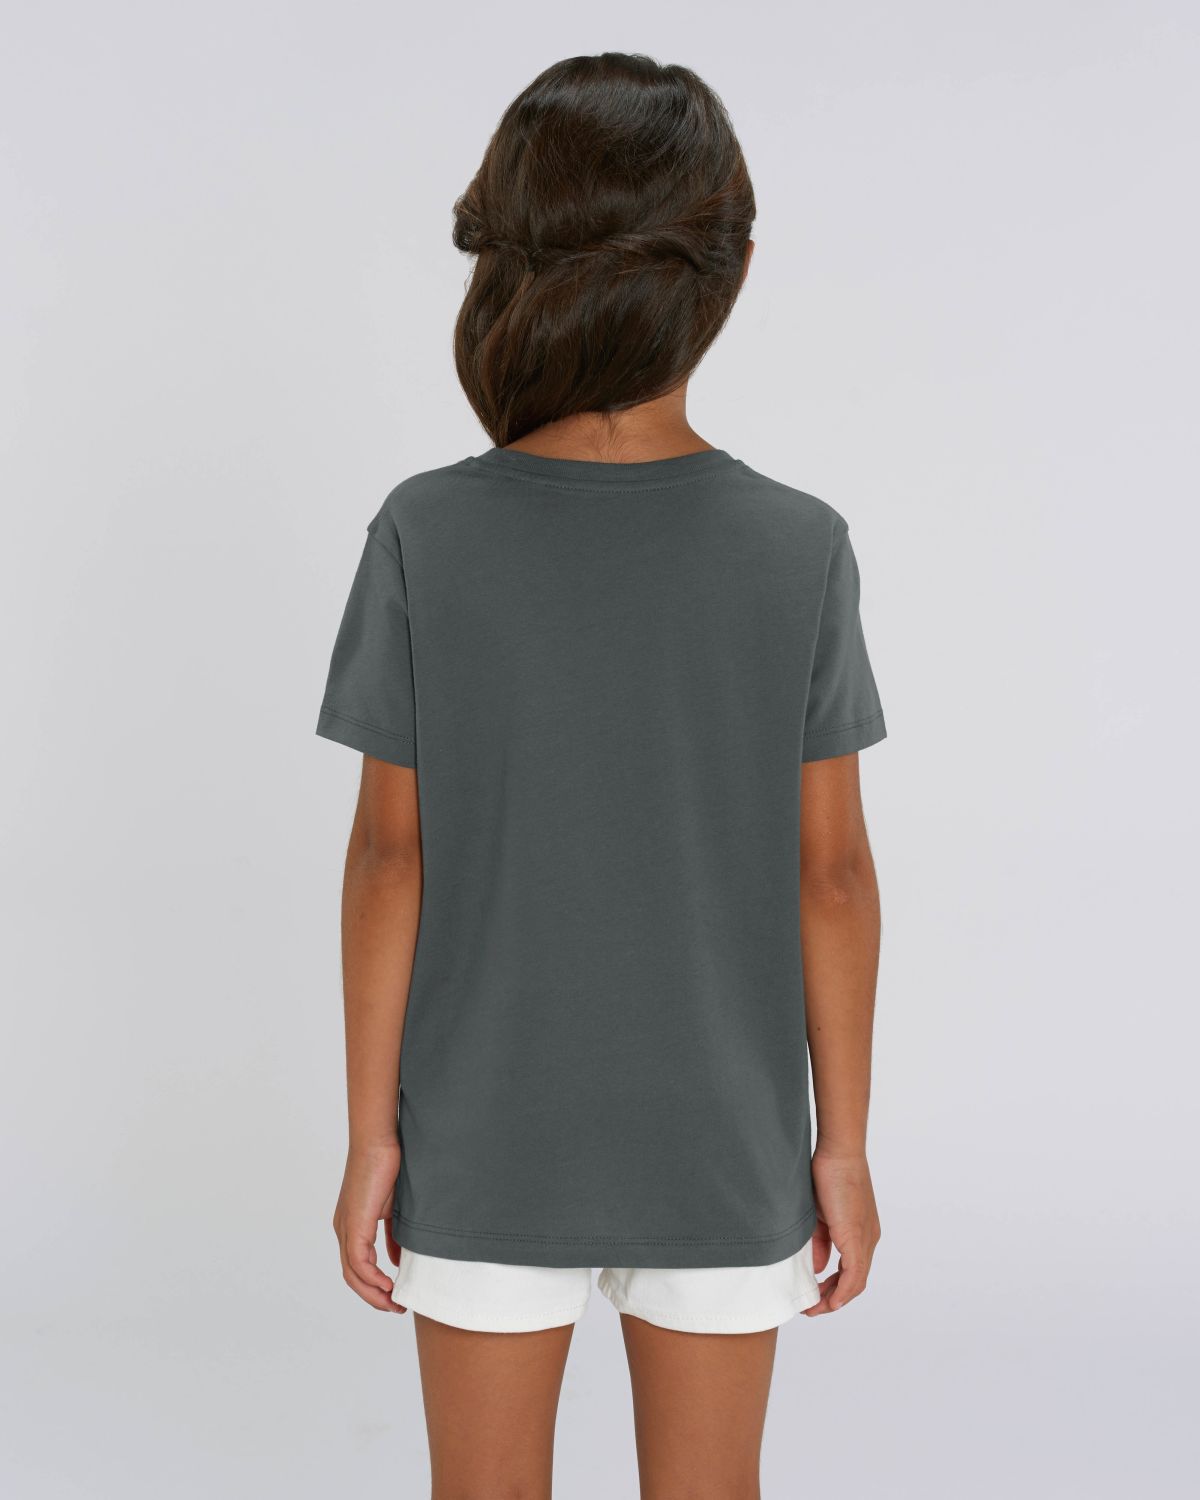 Stanley/Stella's - Mini Creator T-shirt - Anthracite